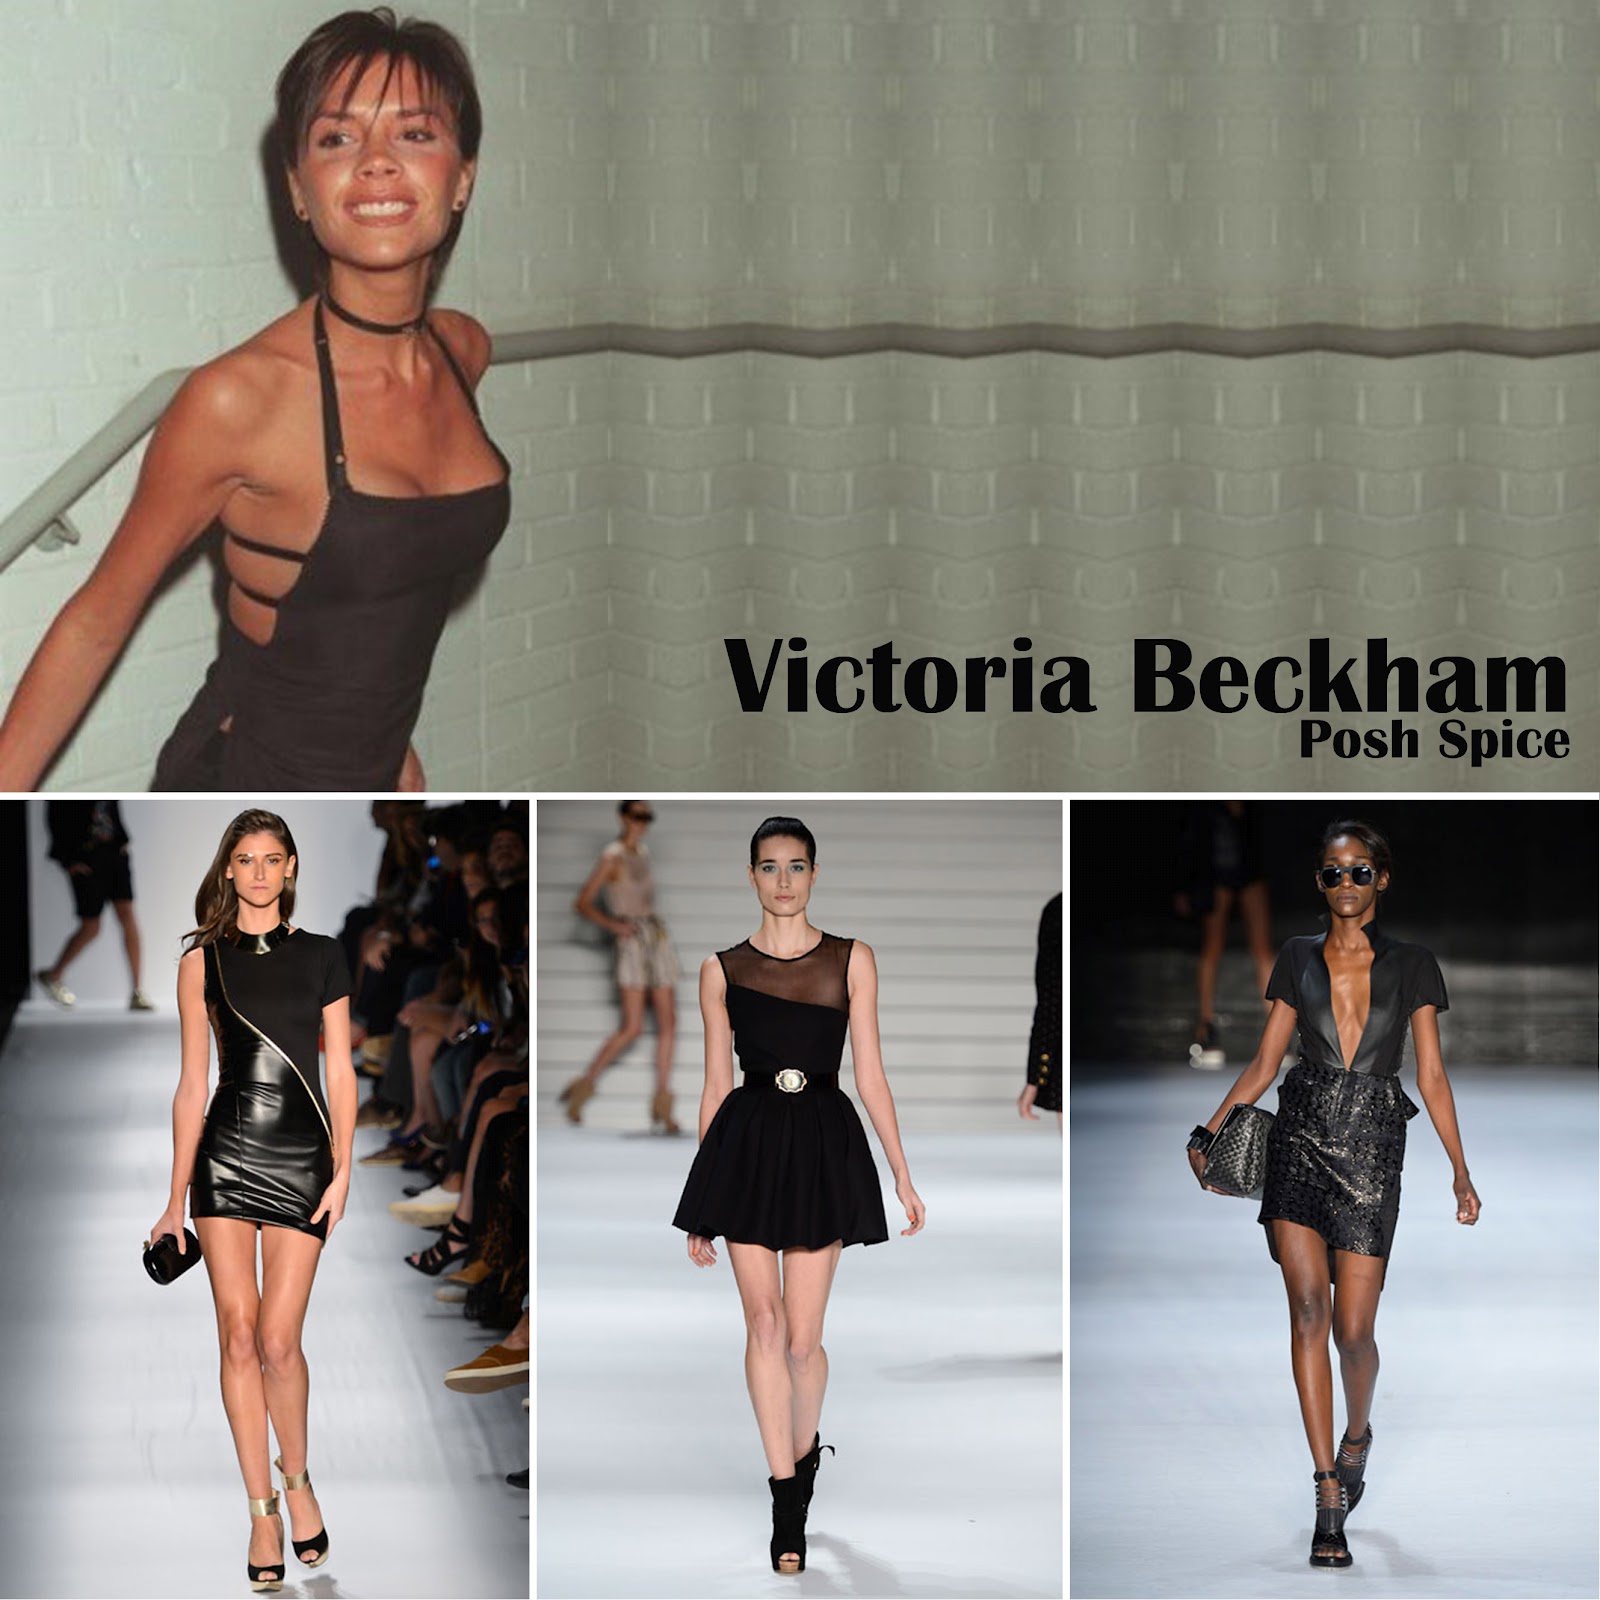 http://3.bp.blogspot.com/-d0EIwGUC_Vw/T-z8sOJg1EI/AAAAAAAAKwk/jktQl4gB8xY/s1600/0+-+Victoria+Beckham+-+POSH+SPICE.jpg